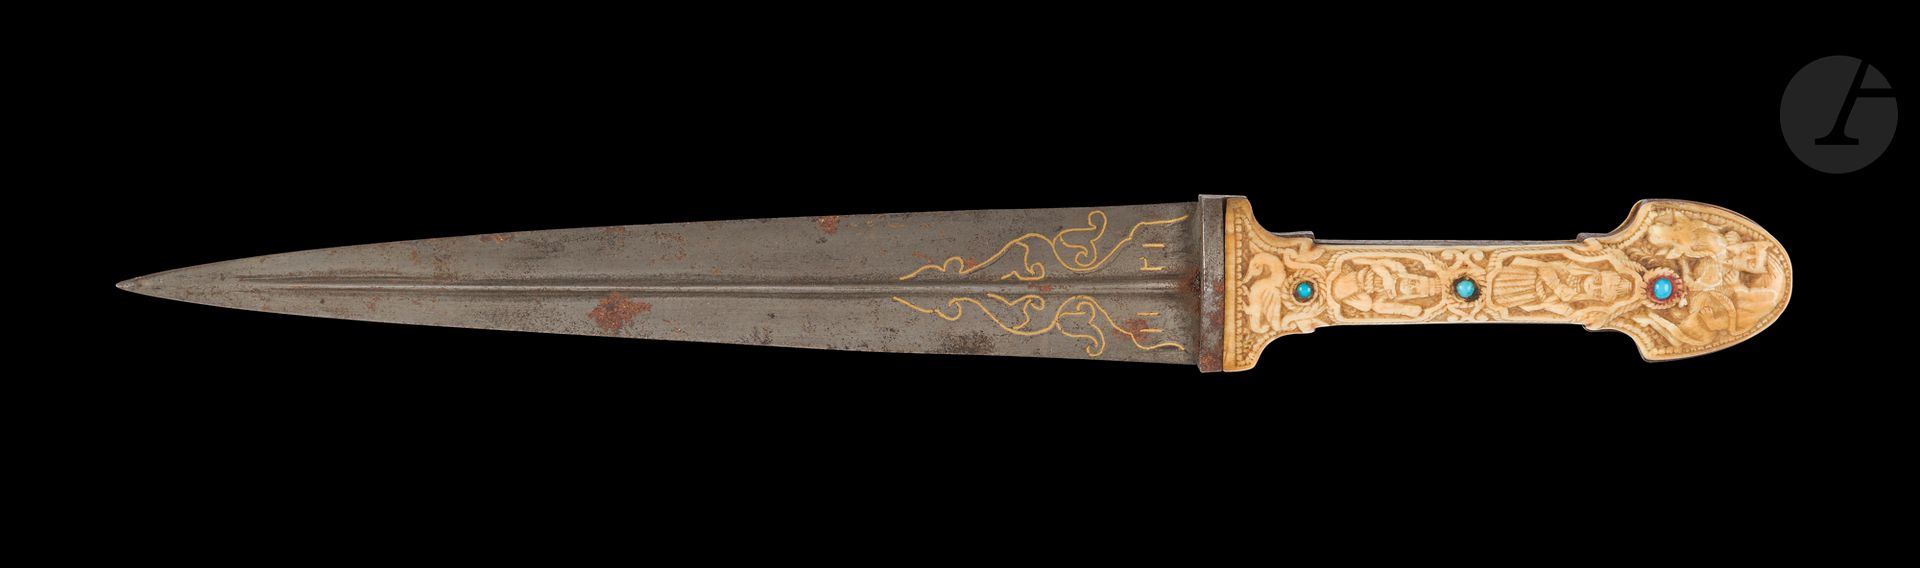 Null Kijal匕首，伊朗卡扎尔，19世纪
钢质直刀，中间有双刃，刀跟处嵌有金质镶边，刻有日期1121 H / 1709。戴着宪兵帽的手柄上装饰着海象牙板，&hellip;